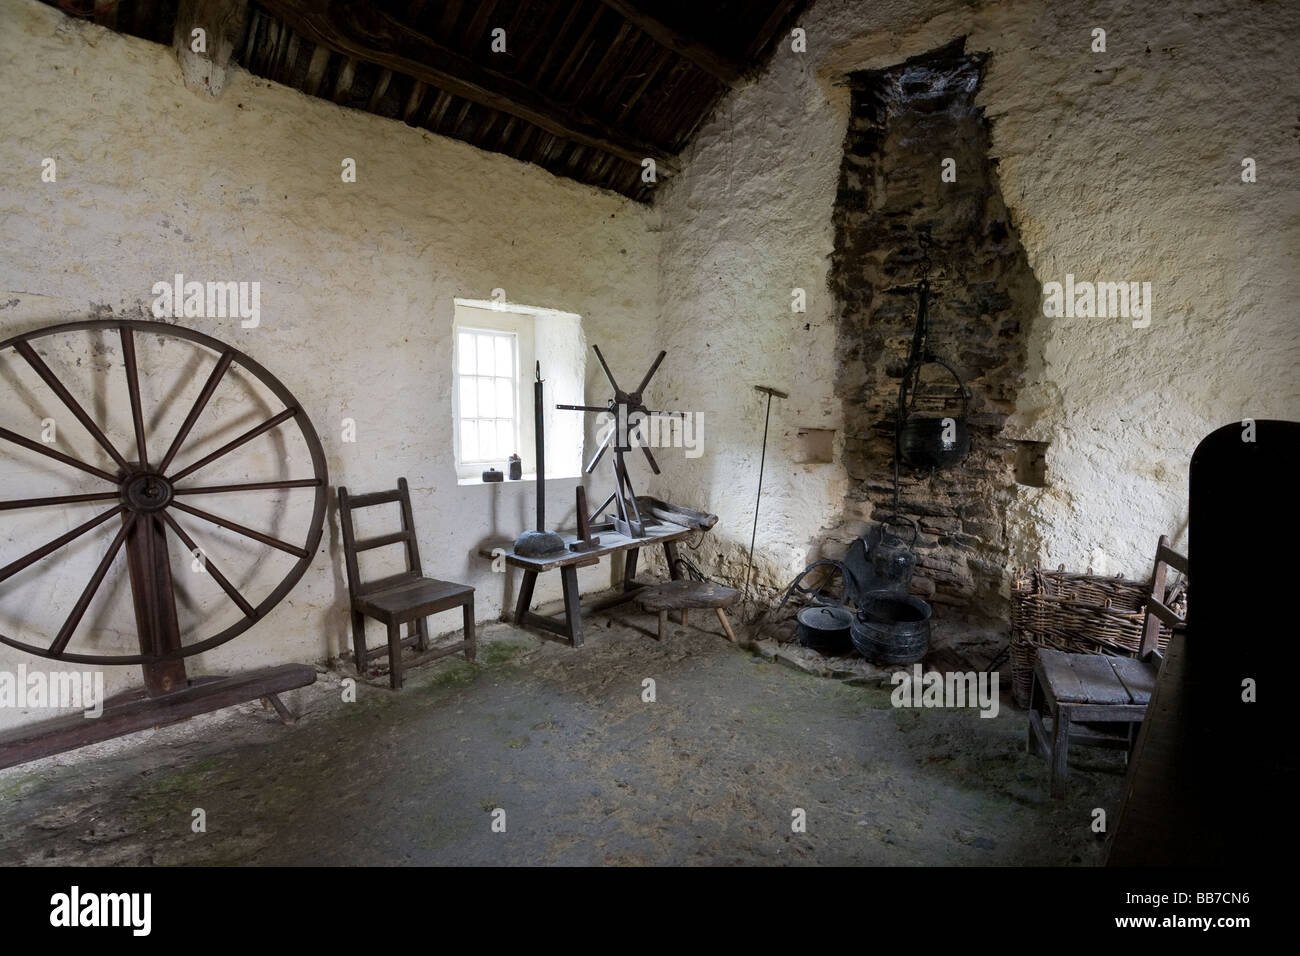 Eighteenth Century Irish Cottage Interior. The interior of a 18th century cottage with spinning wheel and open fireplace Stock Photo